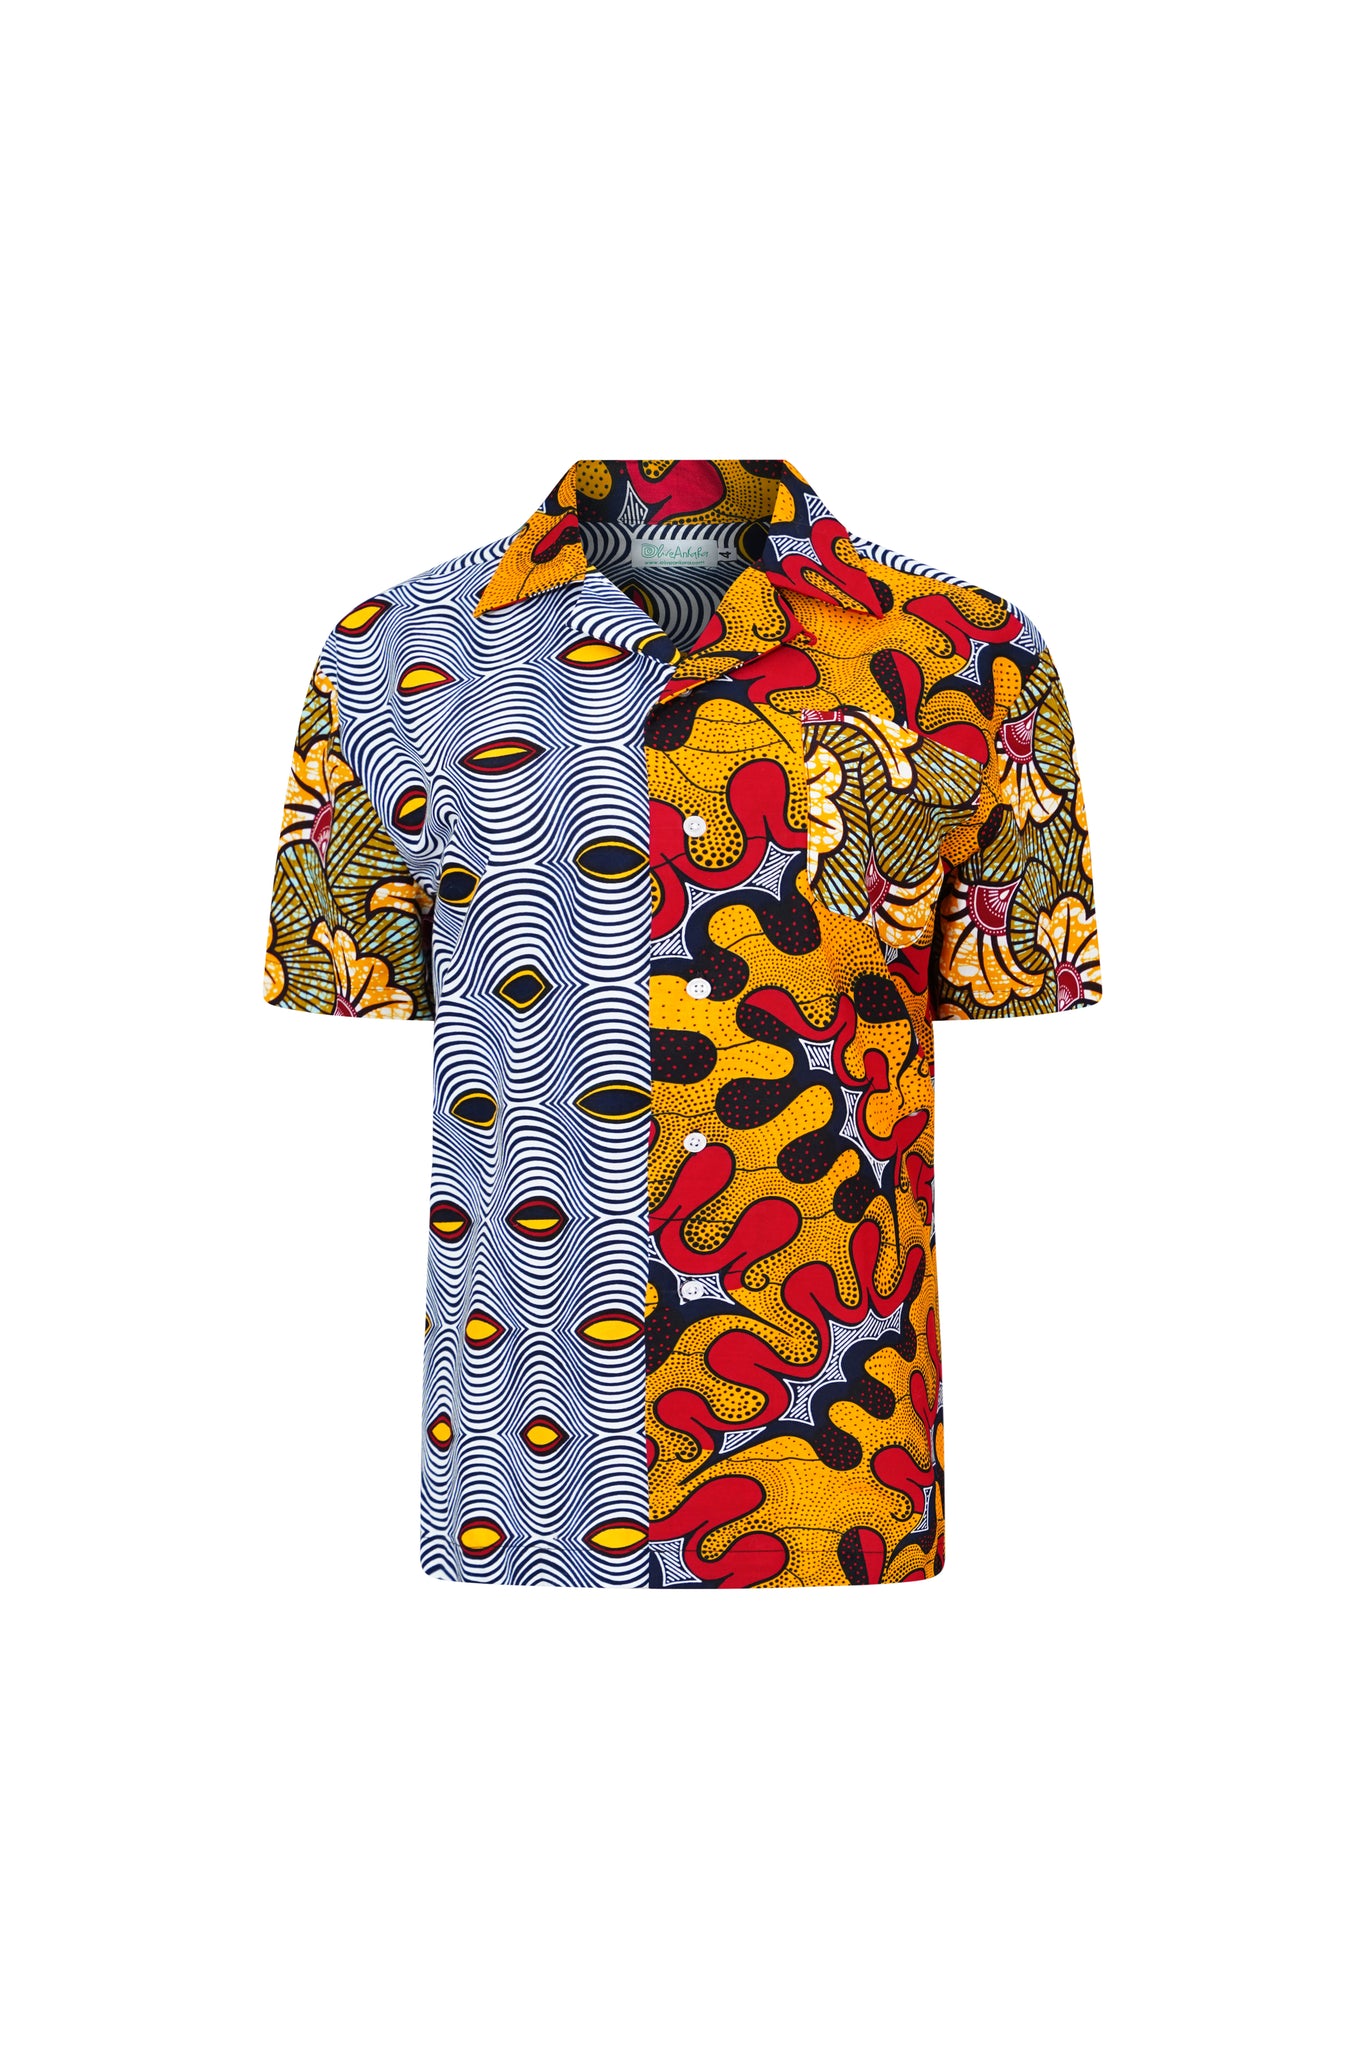 Zika Shirt - Mix Match Awoluba/Rolls Royce Red Yellow and Black African Ankara Wax Cotton Print